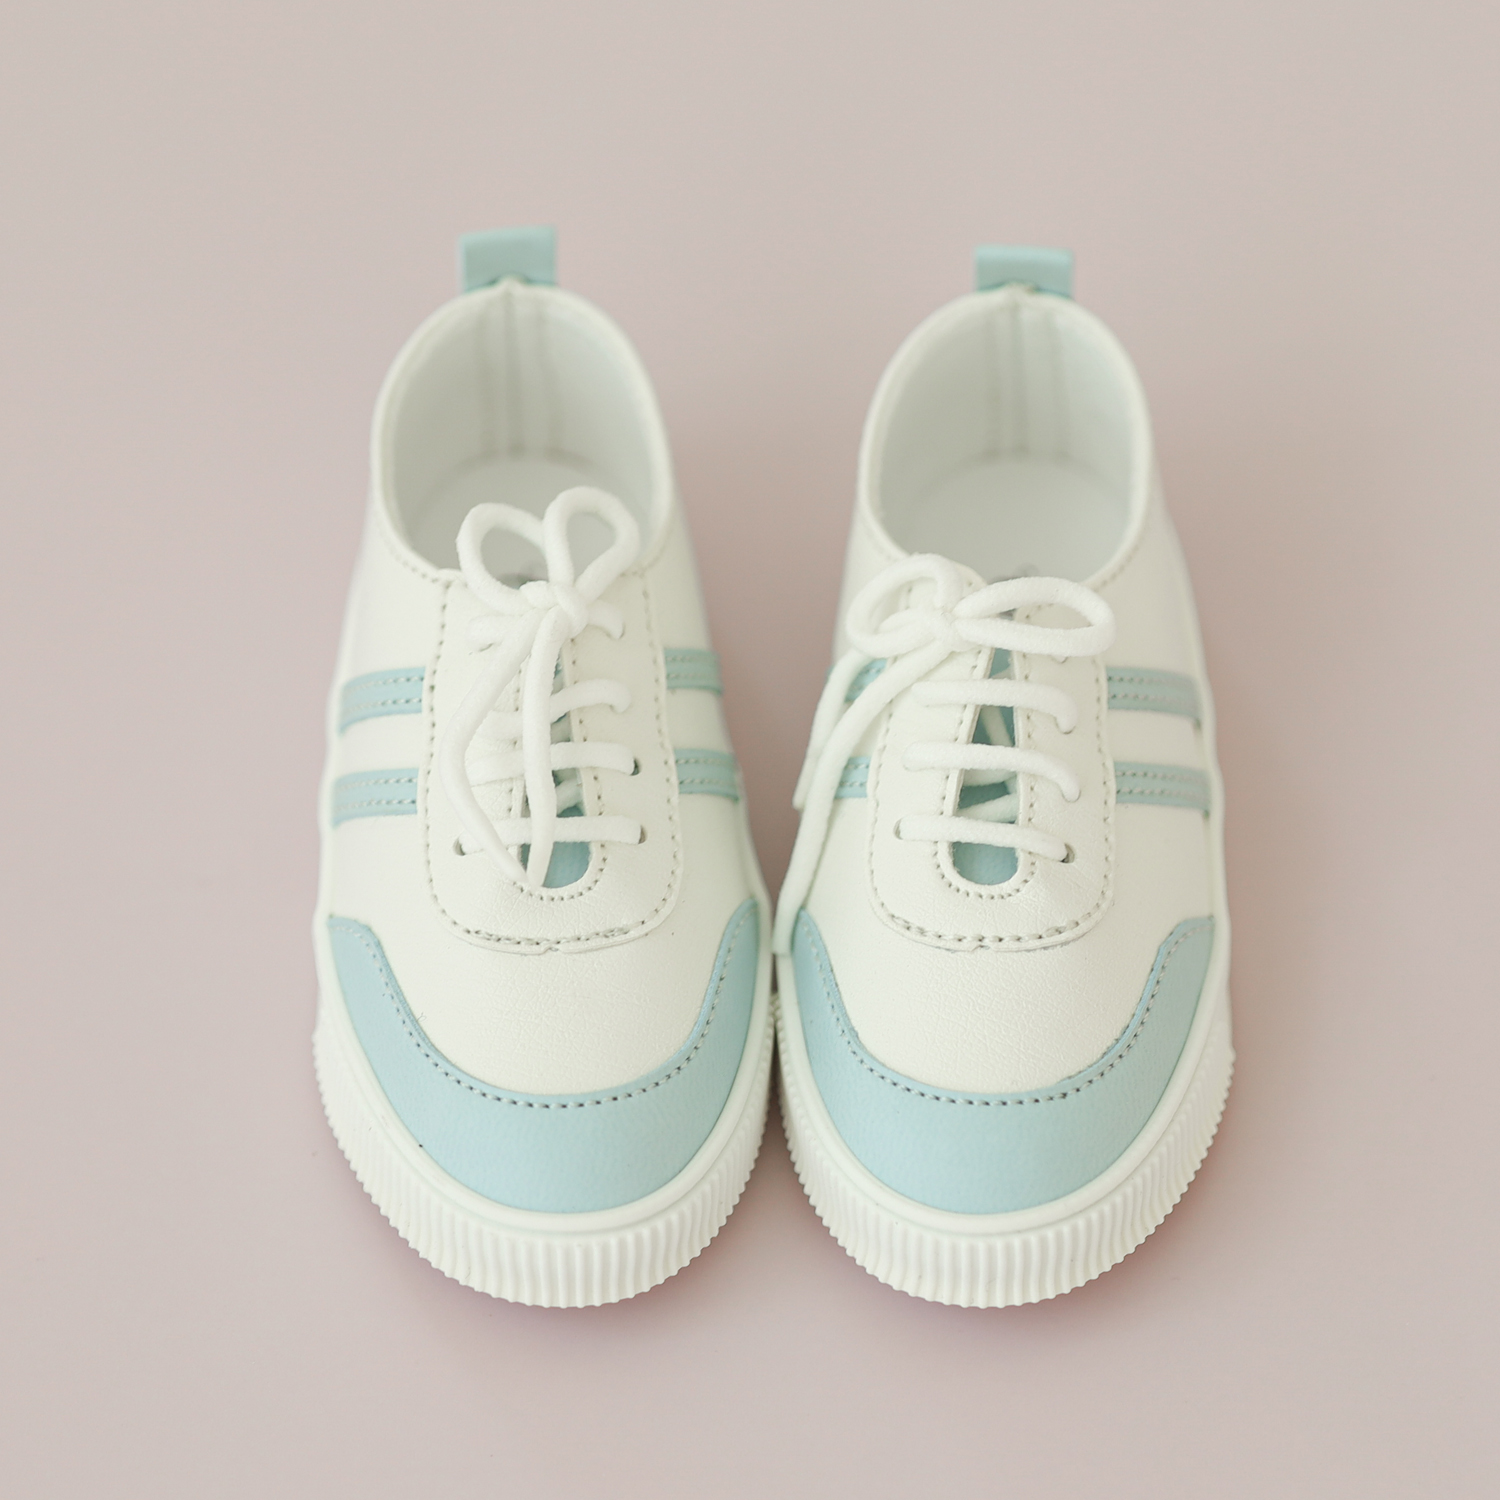 [SD9-16 Girl] Line sneakers. Sky